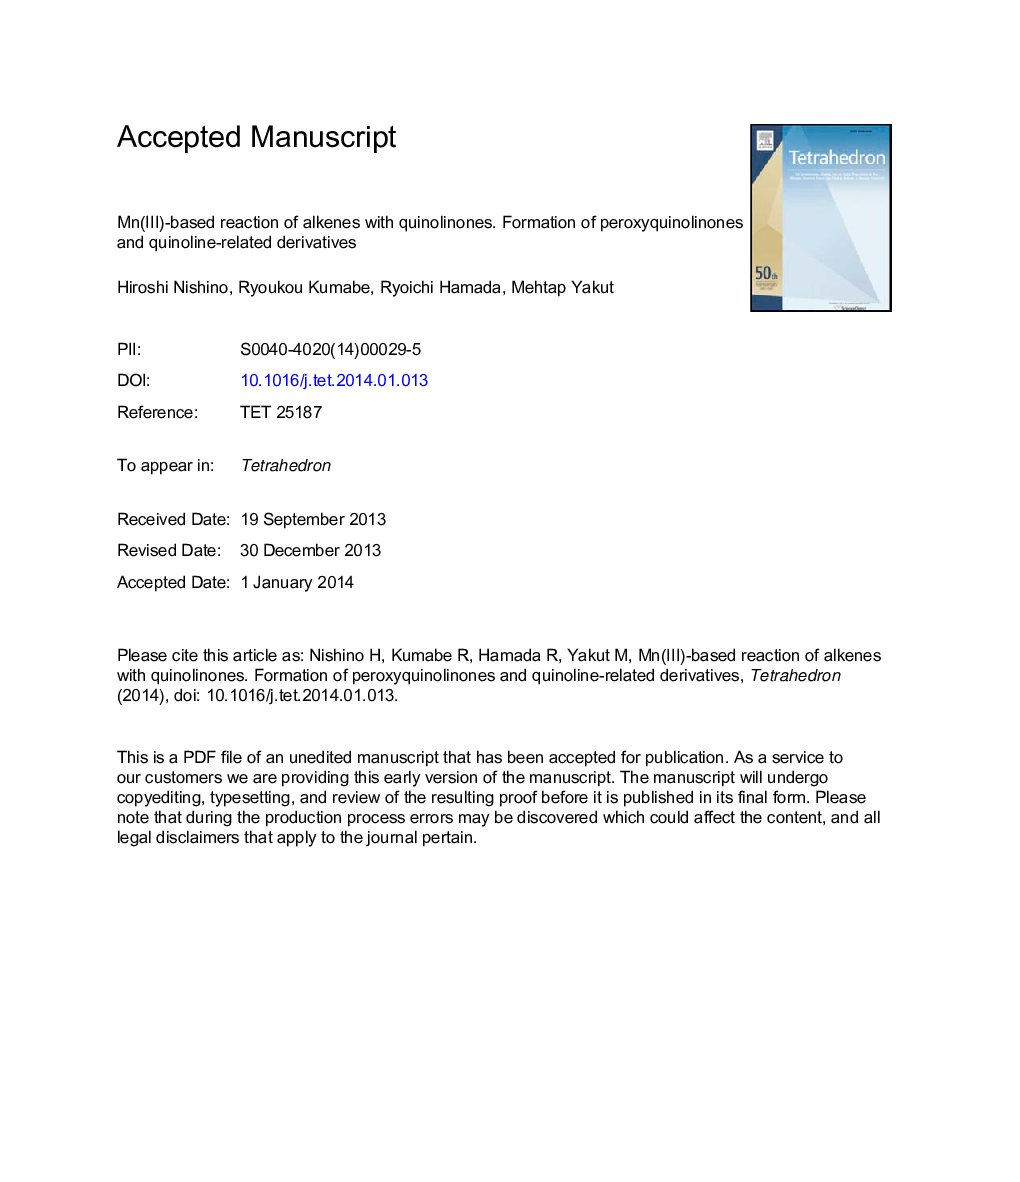 Mn(III)-based reaction of alkenes with quinolinones. Formation of peroxyquinolinones and quinoline-related derivatives